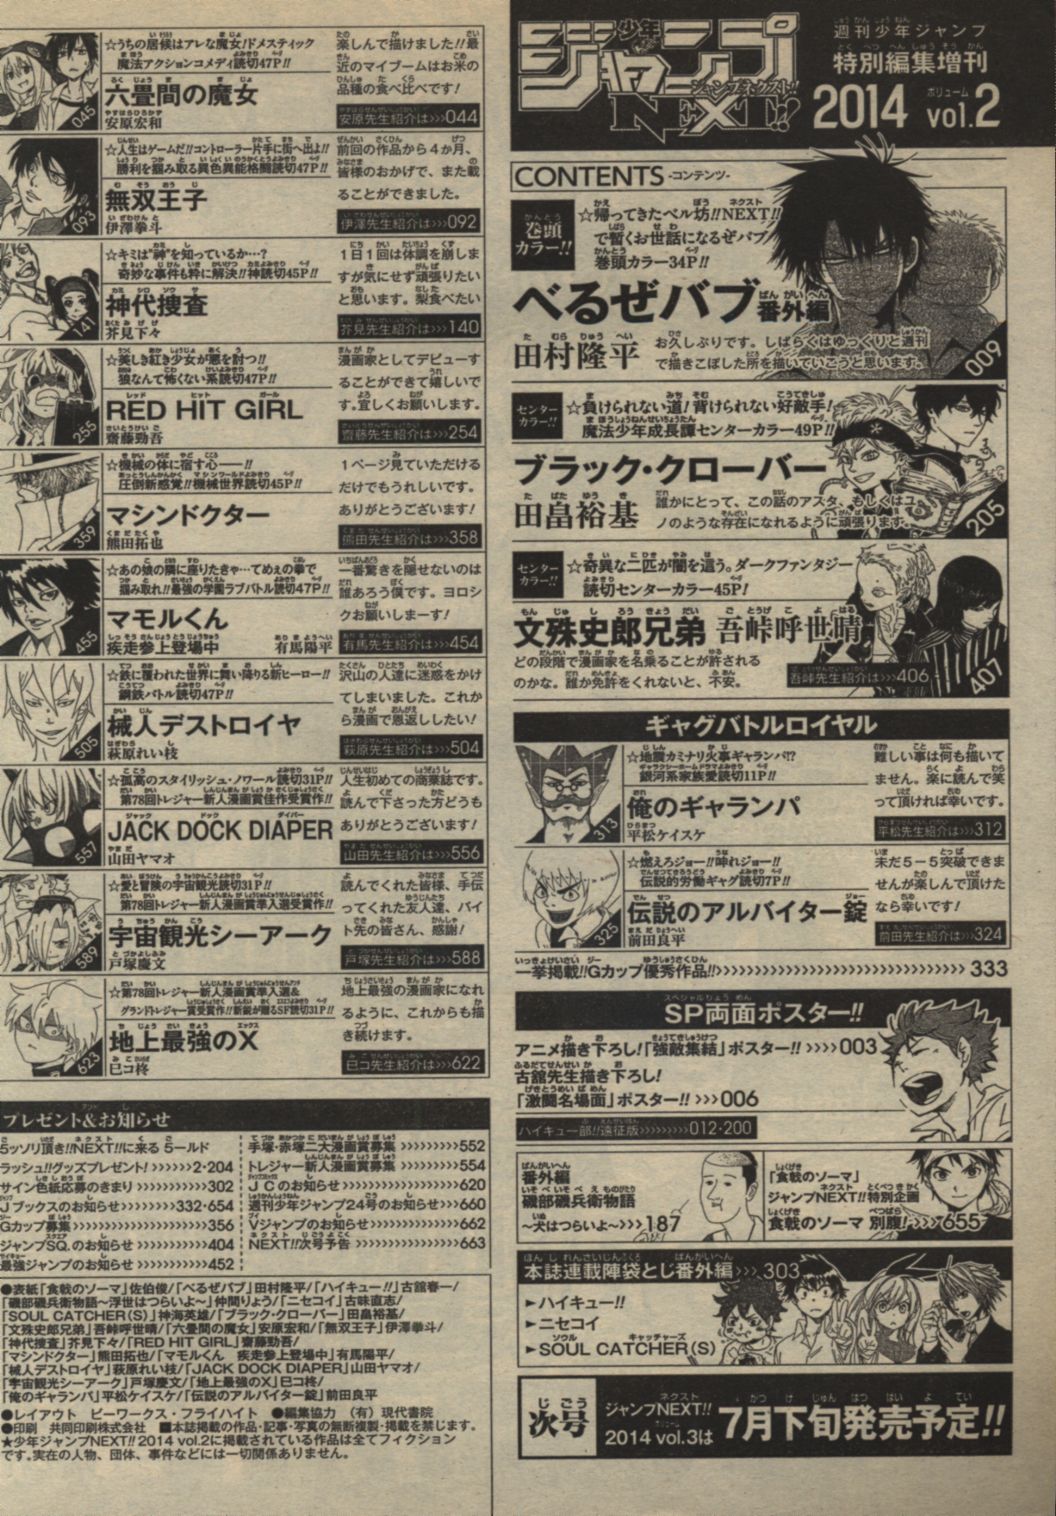 Shueisha Weekly Shonen Jump Special Edit Shonen Jump Next 14 Vol 2 1402 Mandarake Online Shop